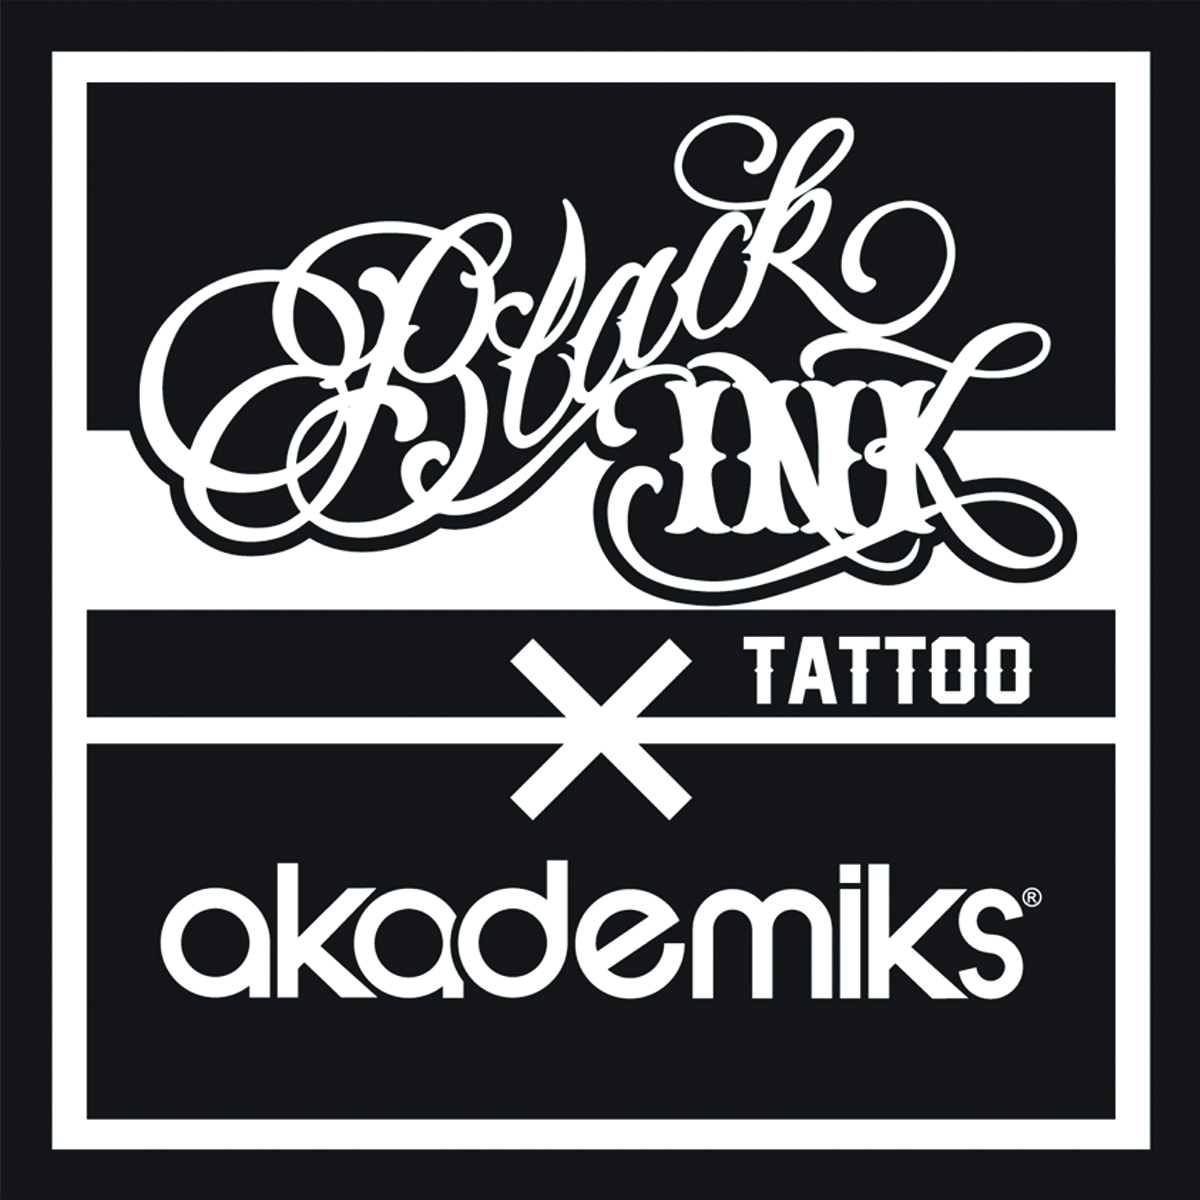 dutchess black ink tattoos